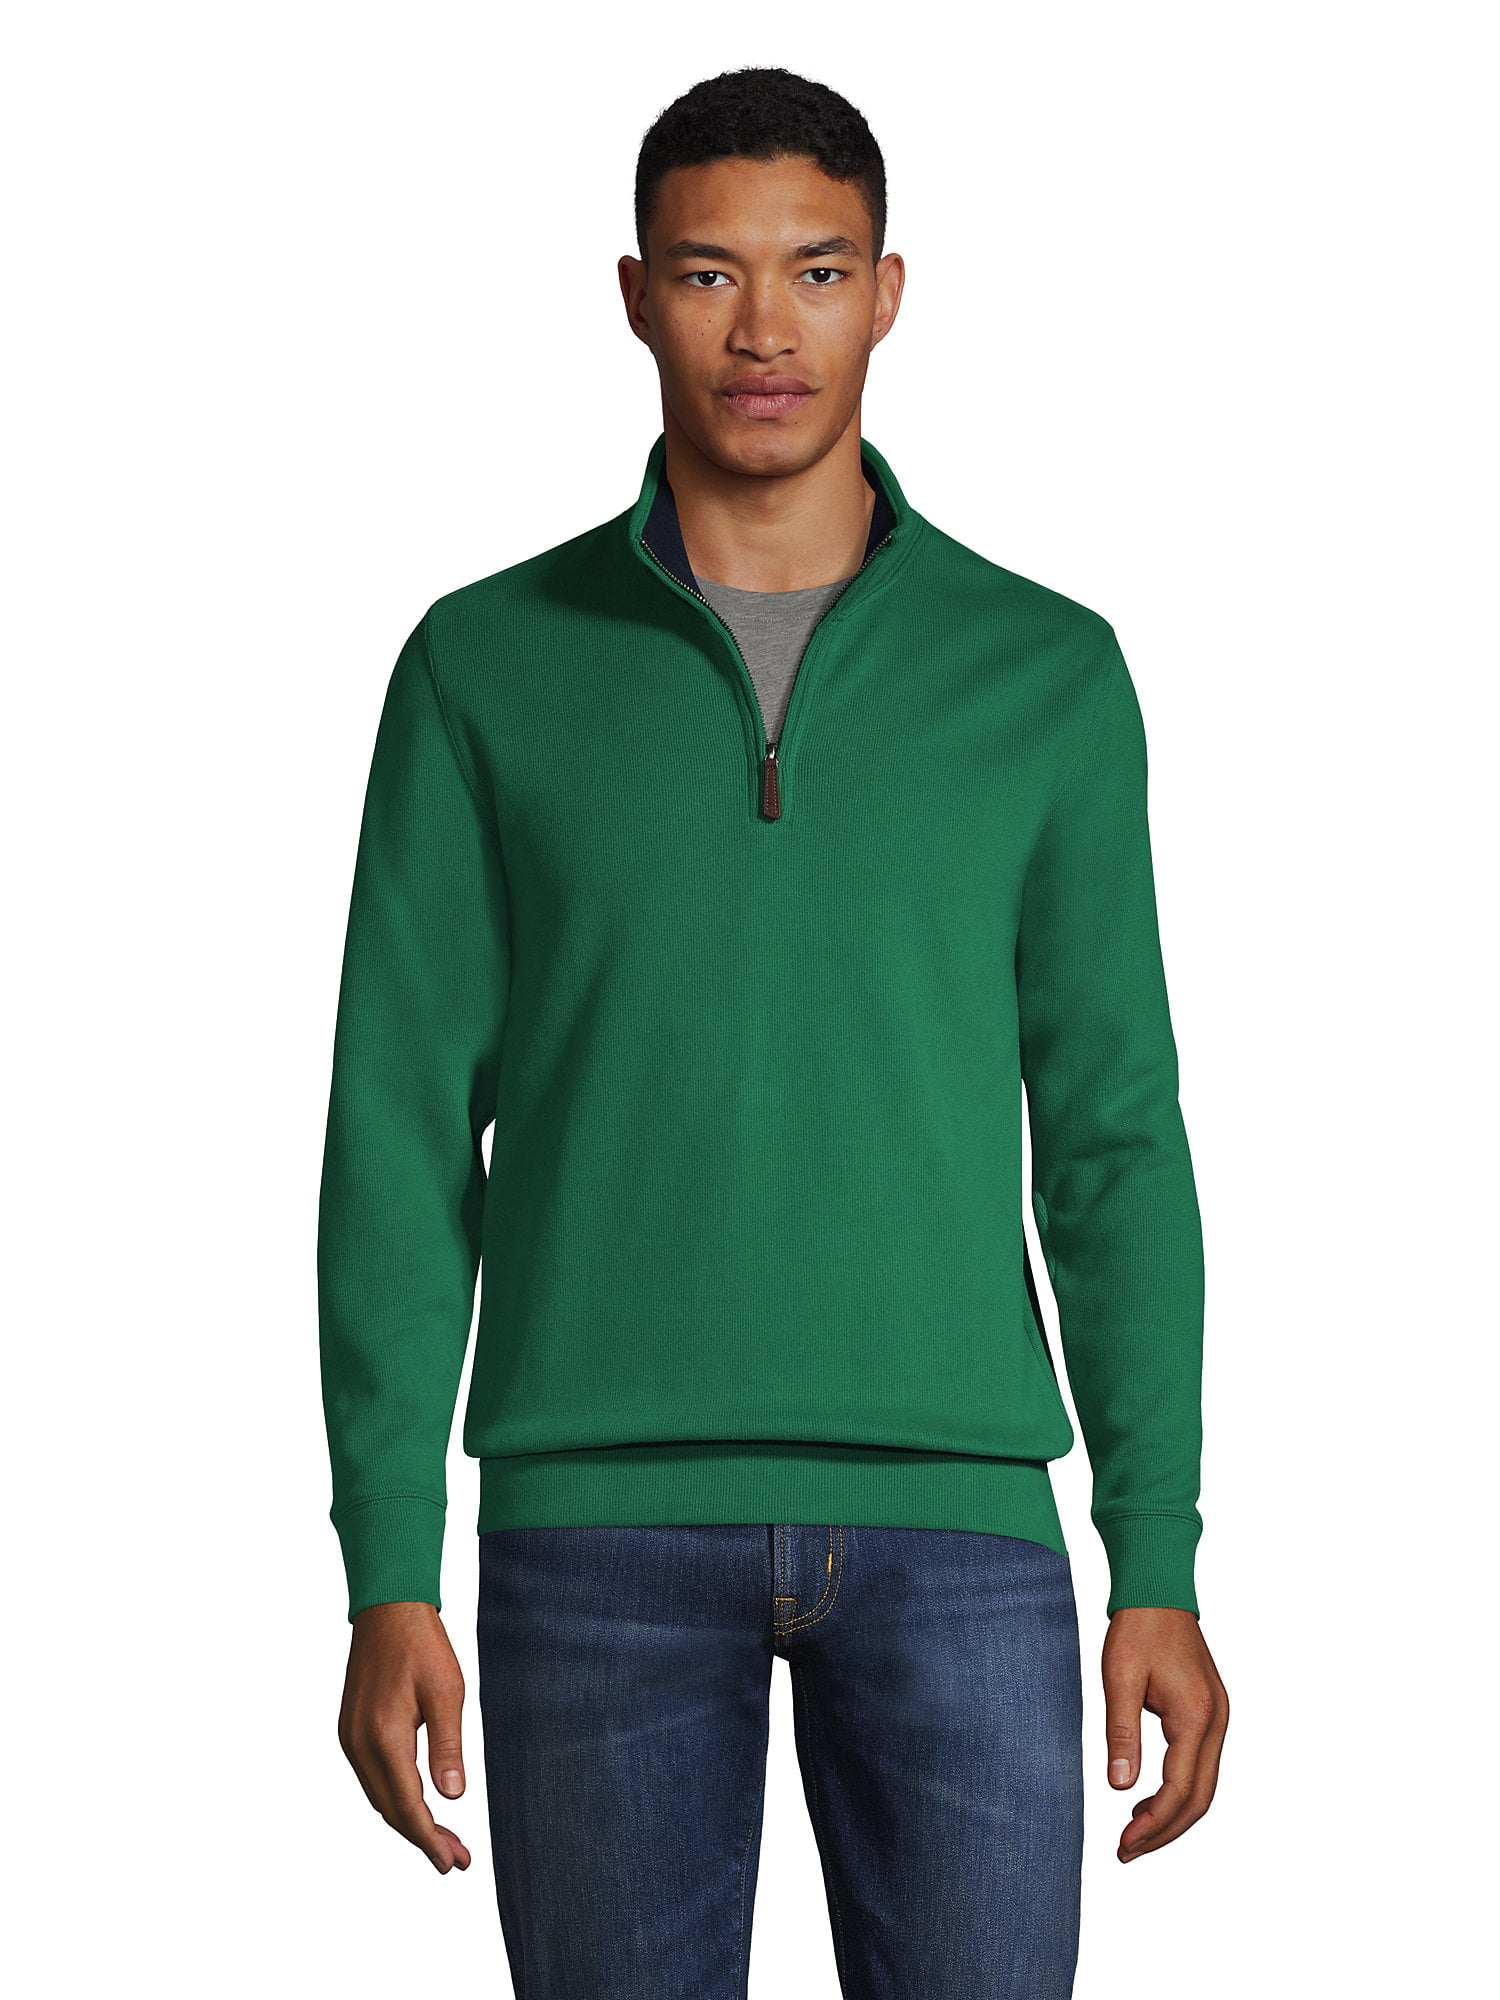 Lands' End Men's Bedford Rib Quarter Zip Sweater - Walmart.com